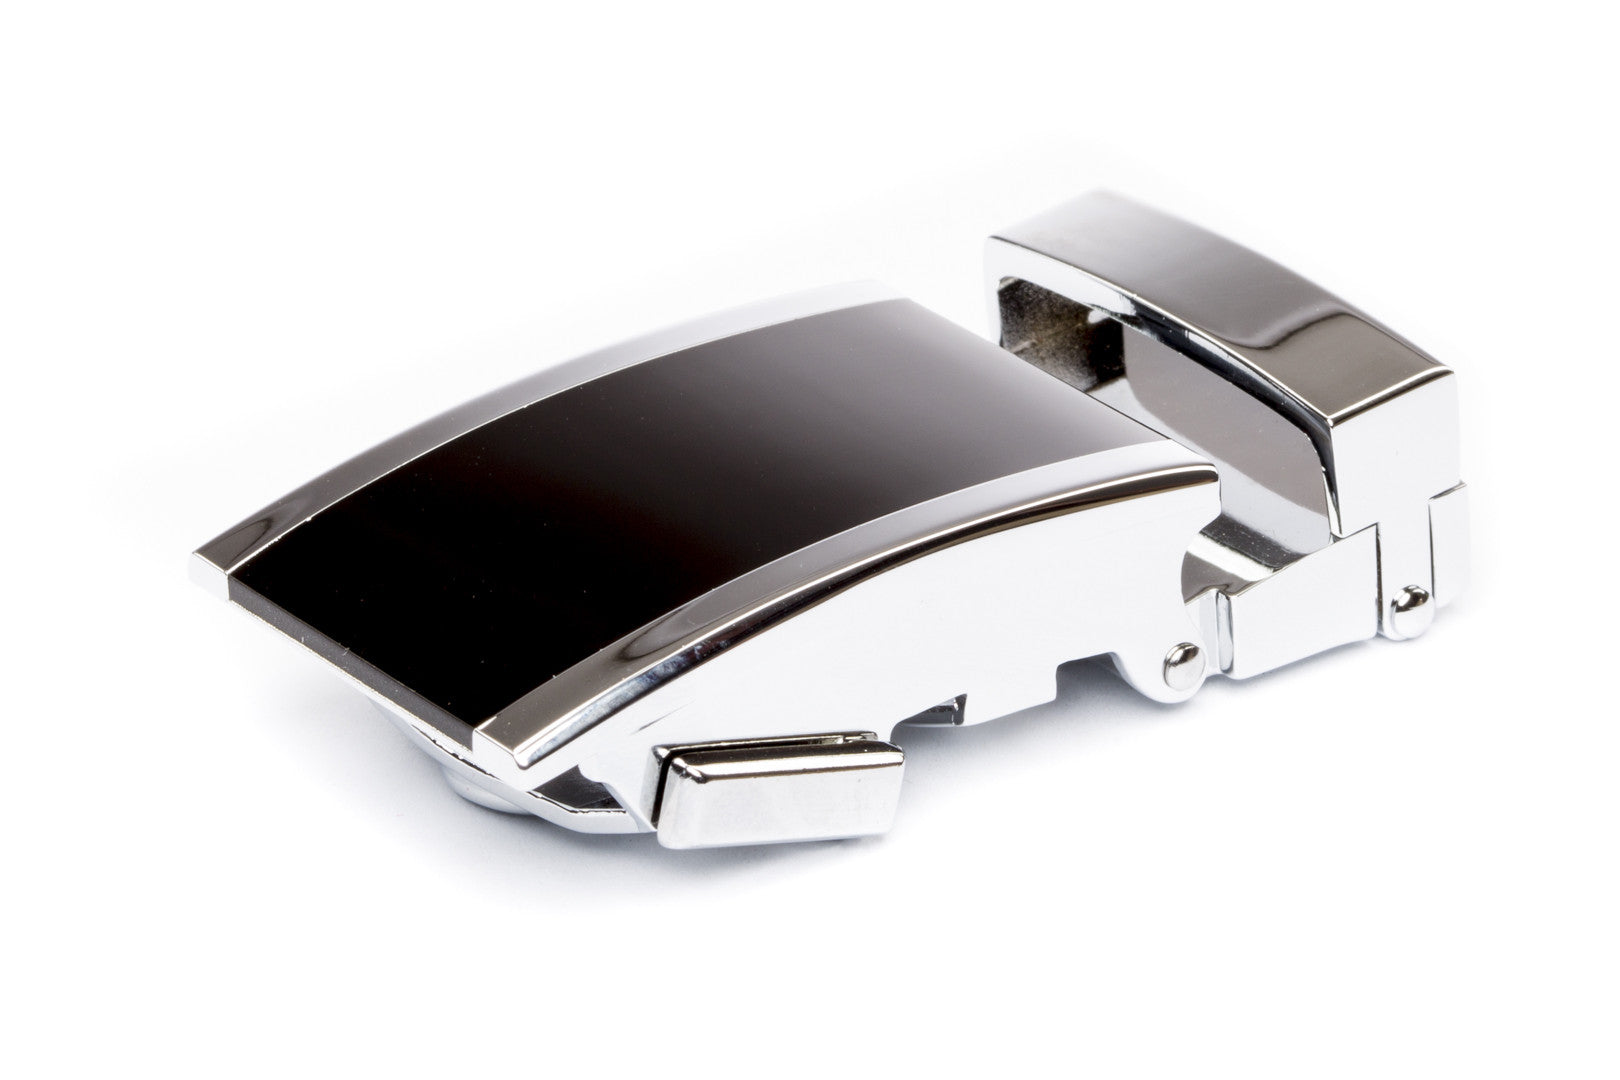 Men's onyx ratchet belt buckle in silver with a 1.25-inch width.